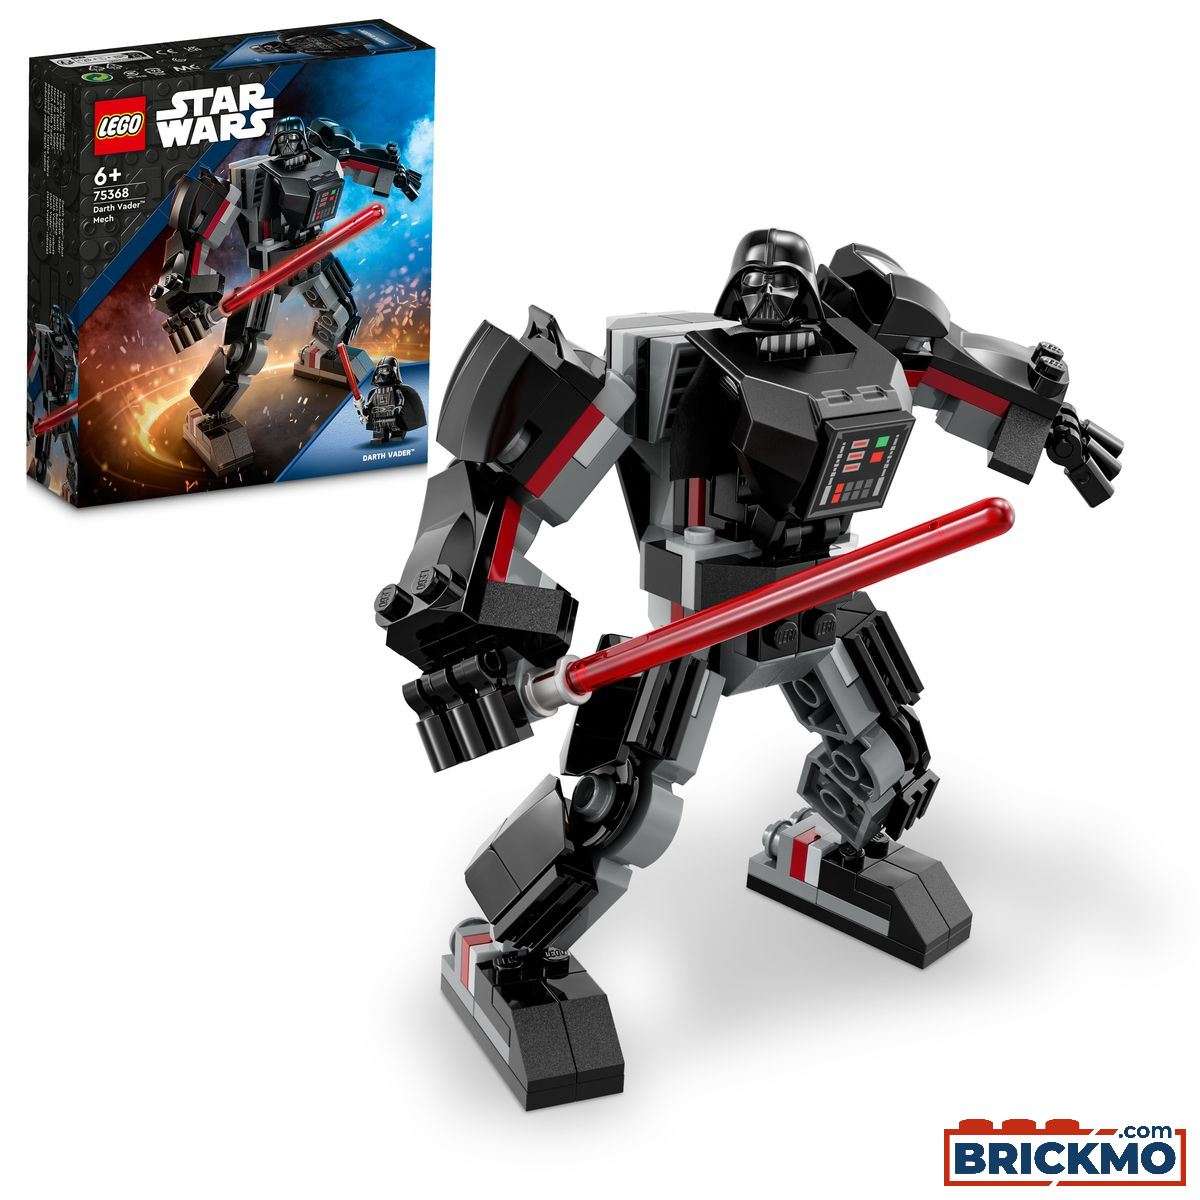 LEGO Star Wars 75368 Darth Vader Mech 75368